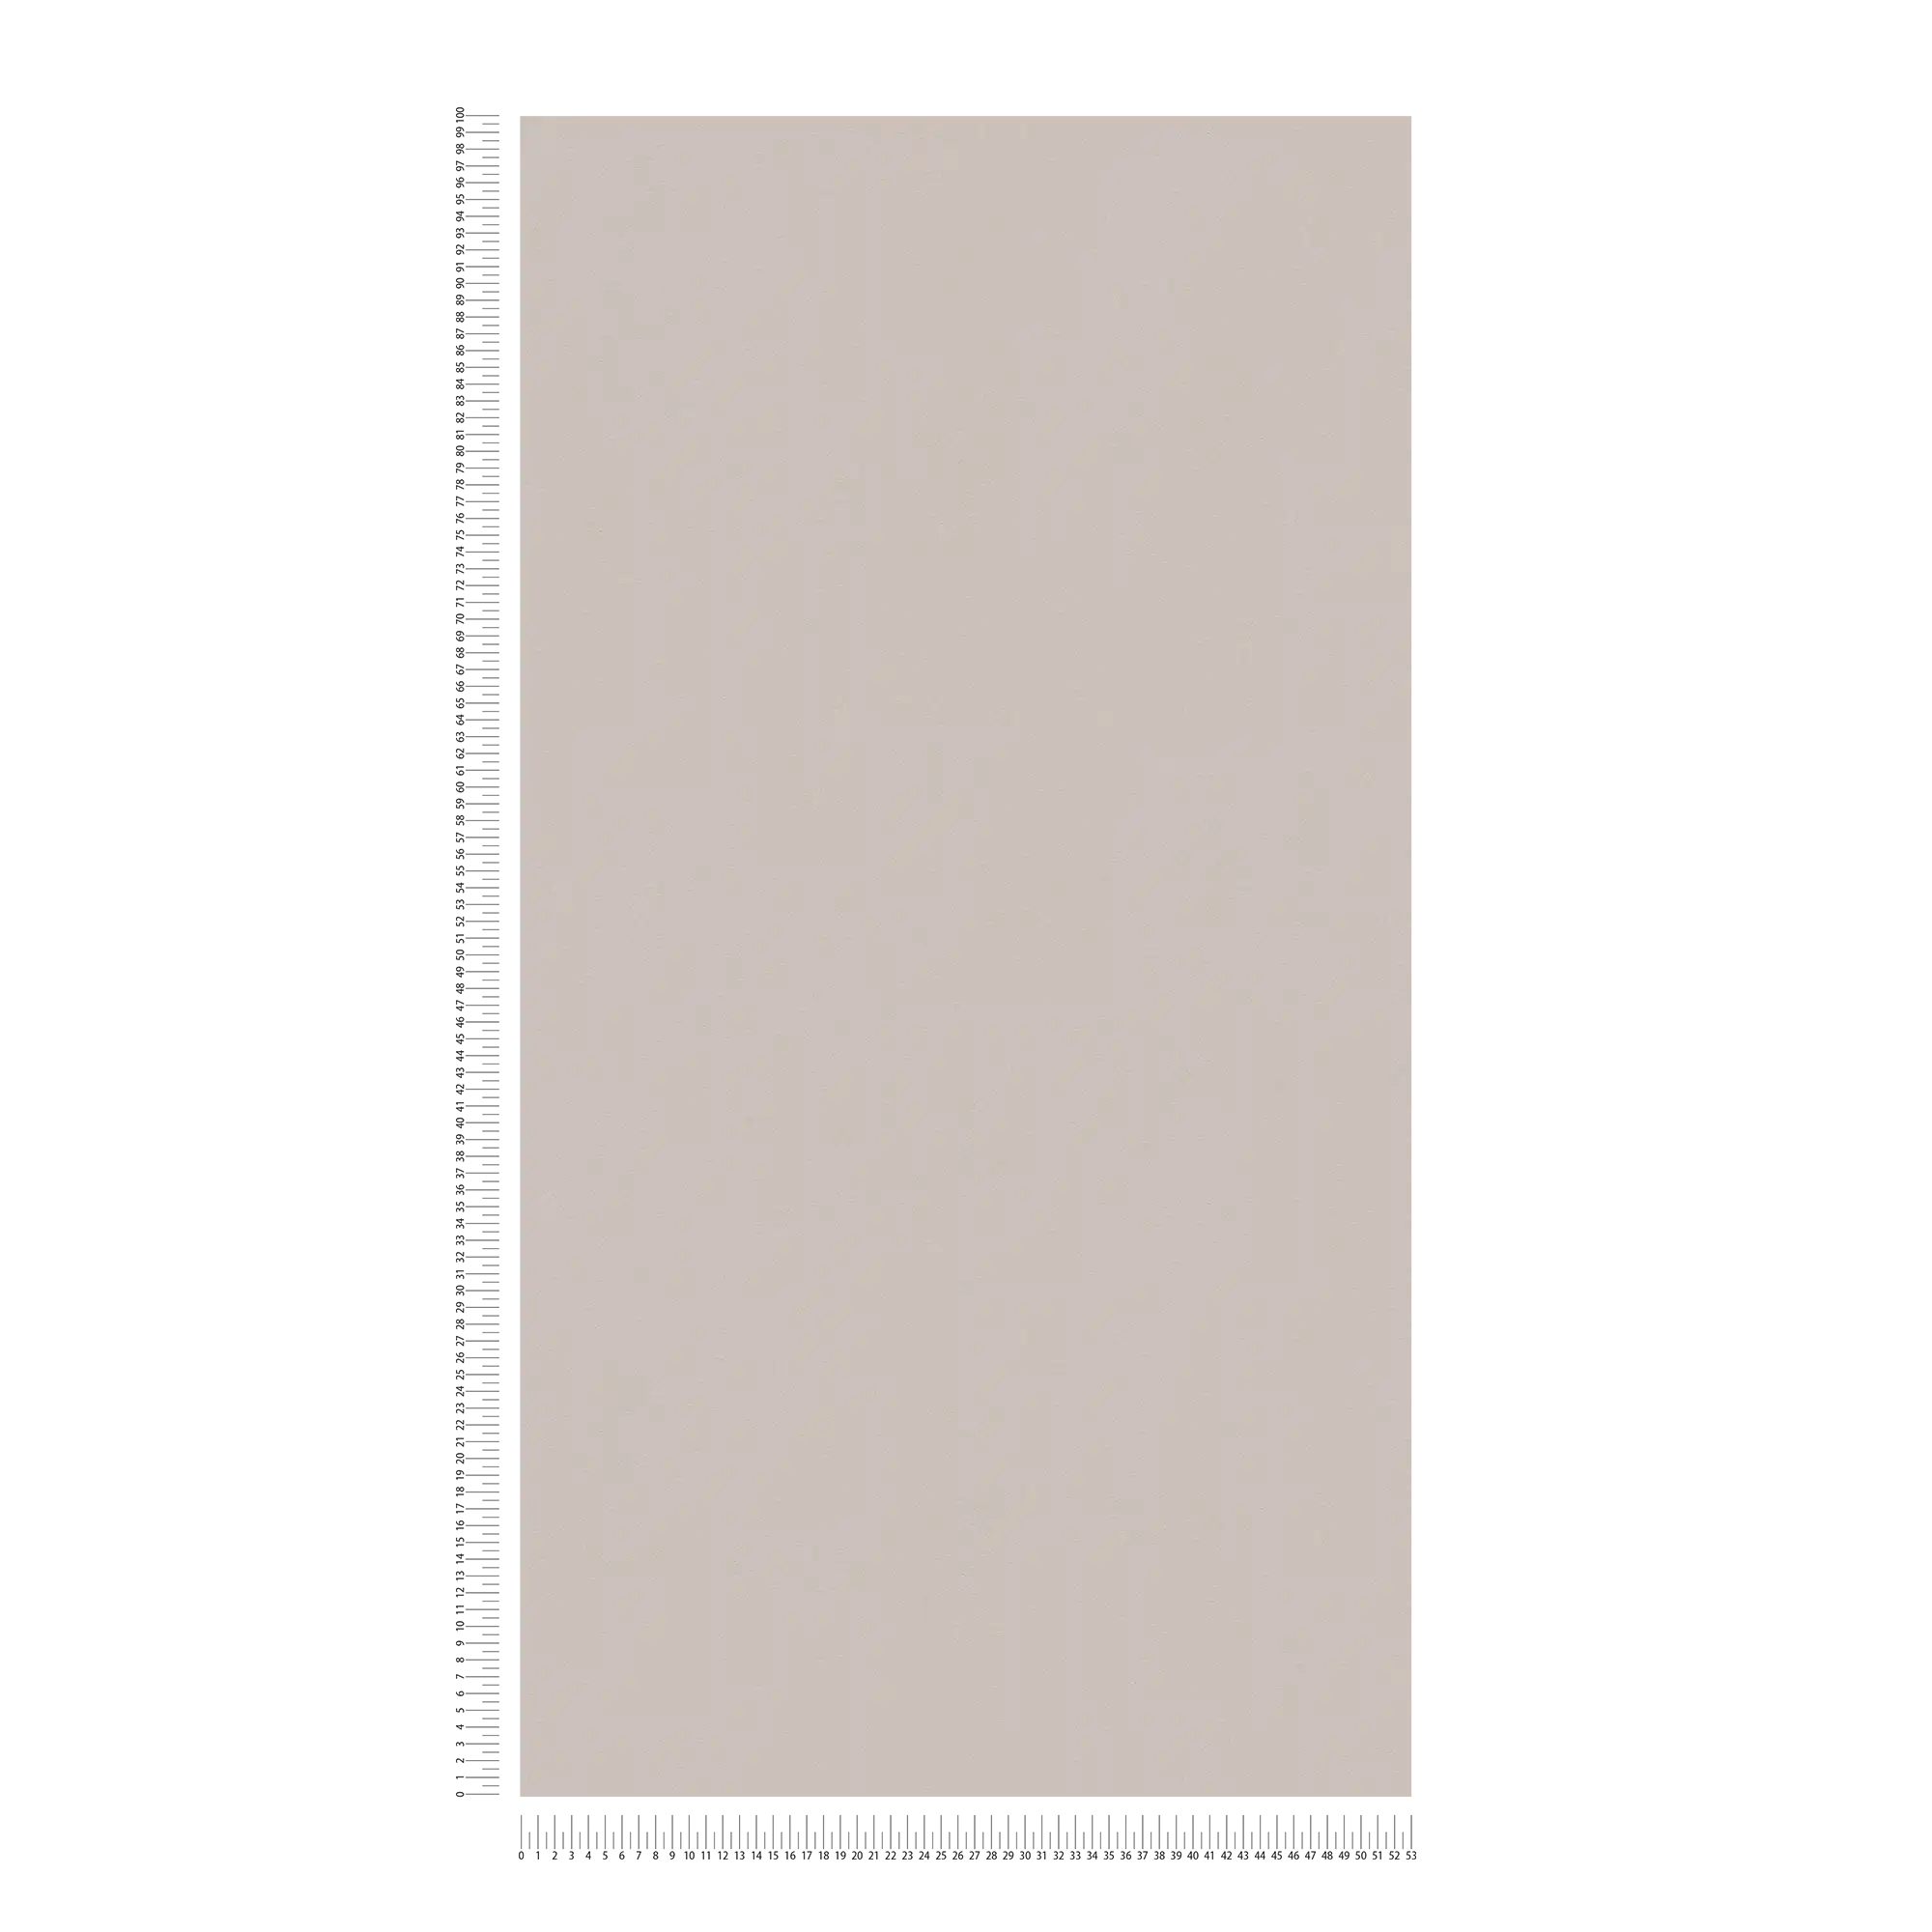             Vliestapete einfarbig, matt, neutraler Erdton – Grau
        